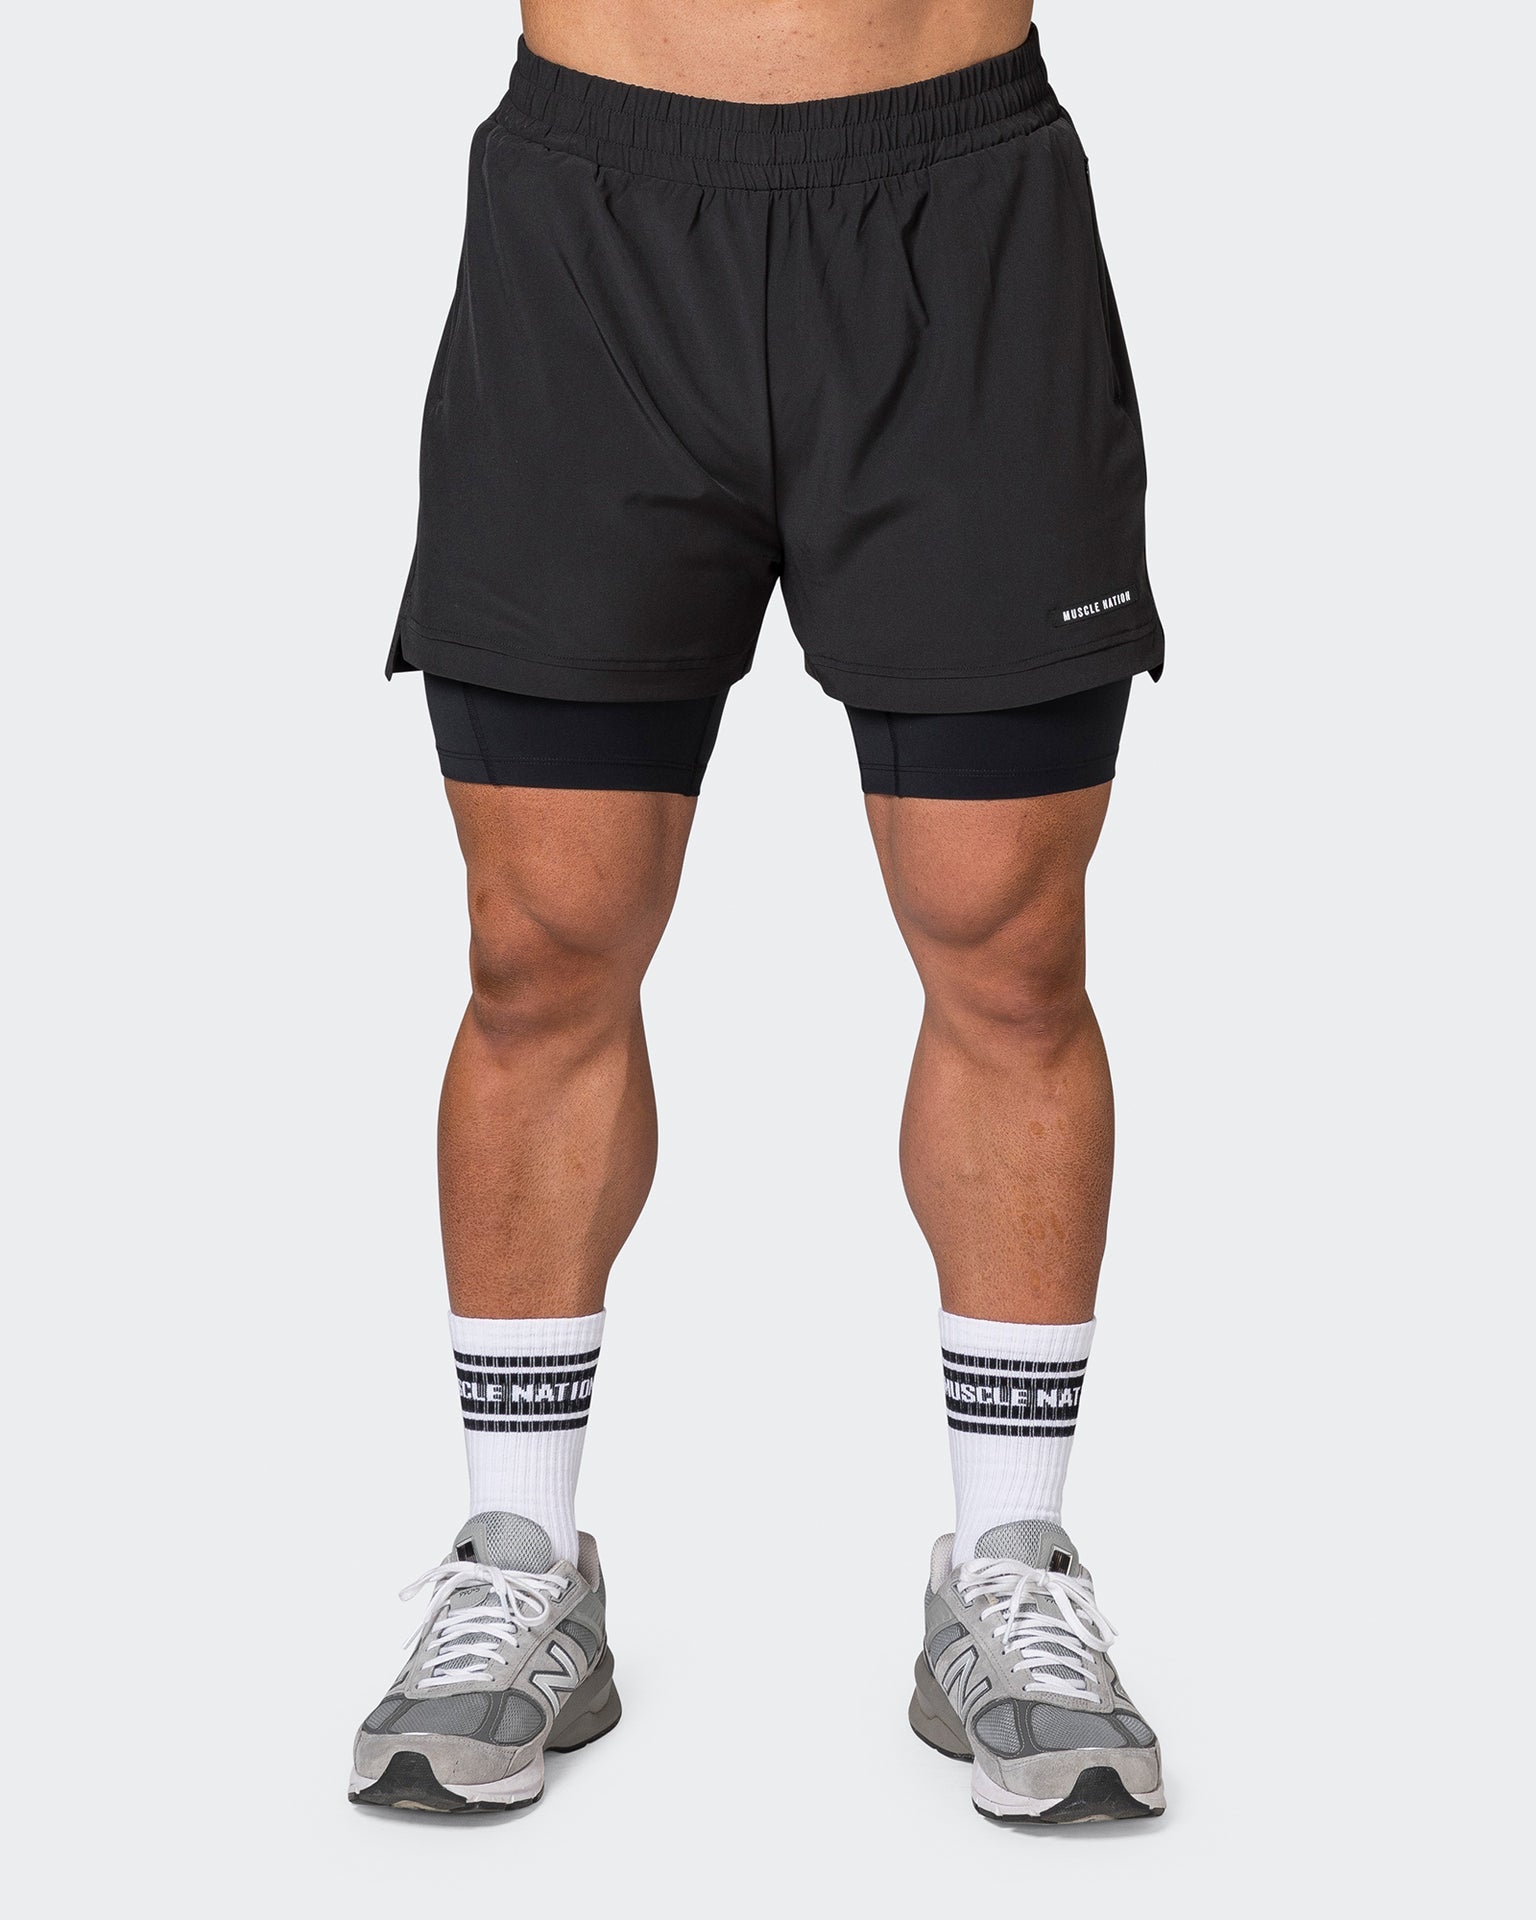 Muscle Nation Shorts Vigour Training 3" Shorts - Black